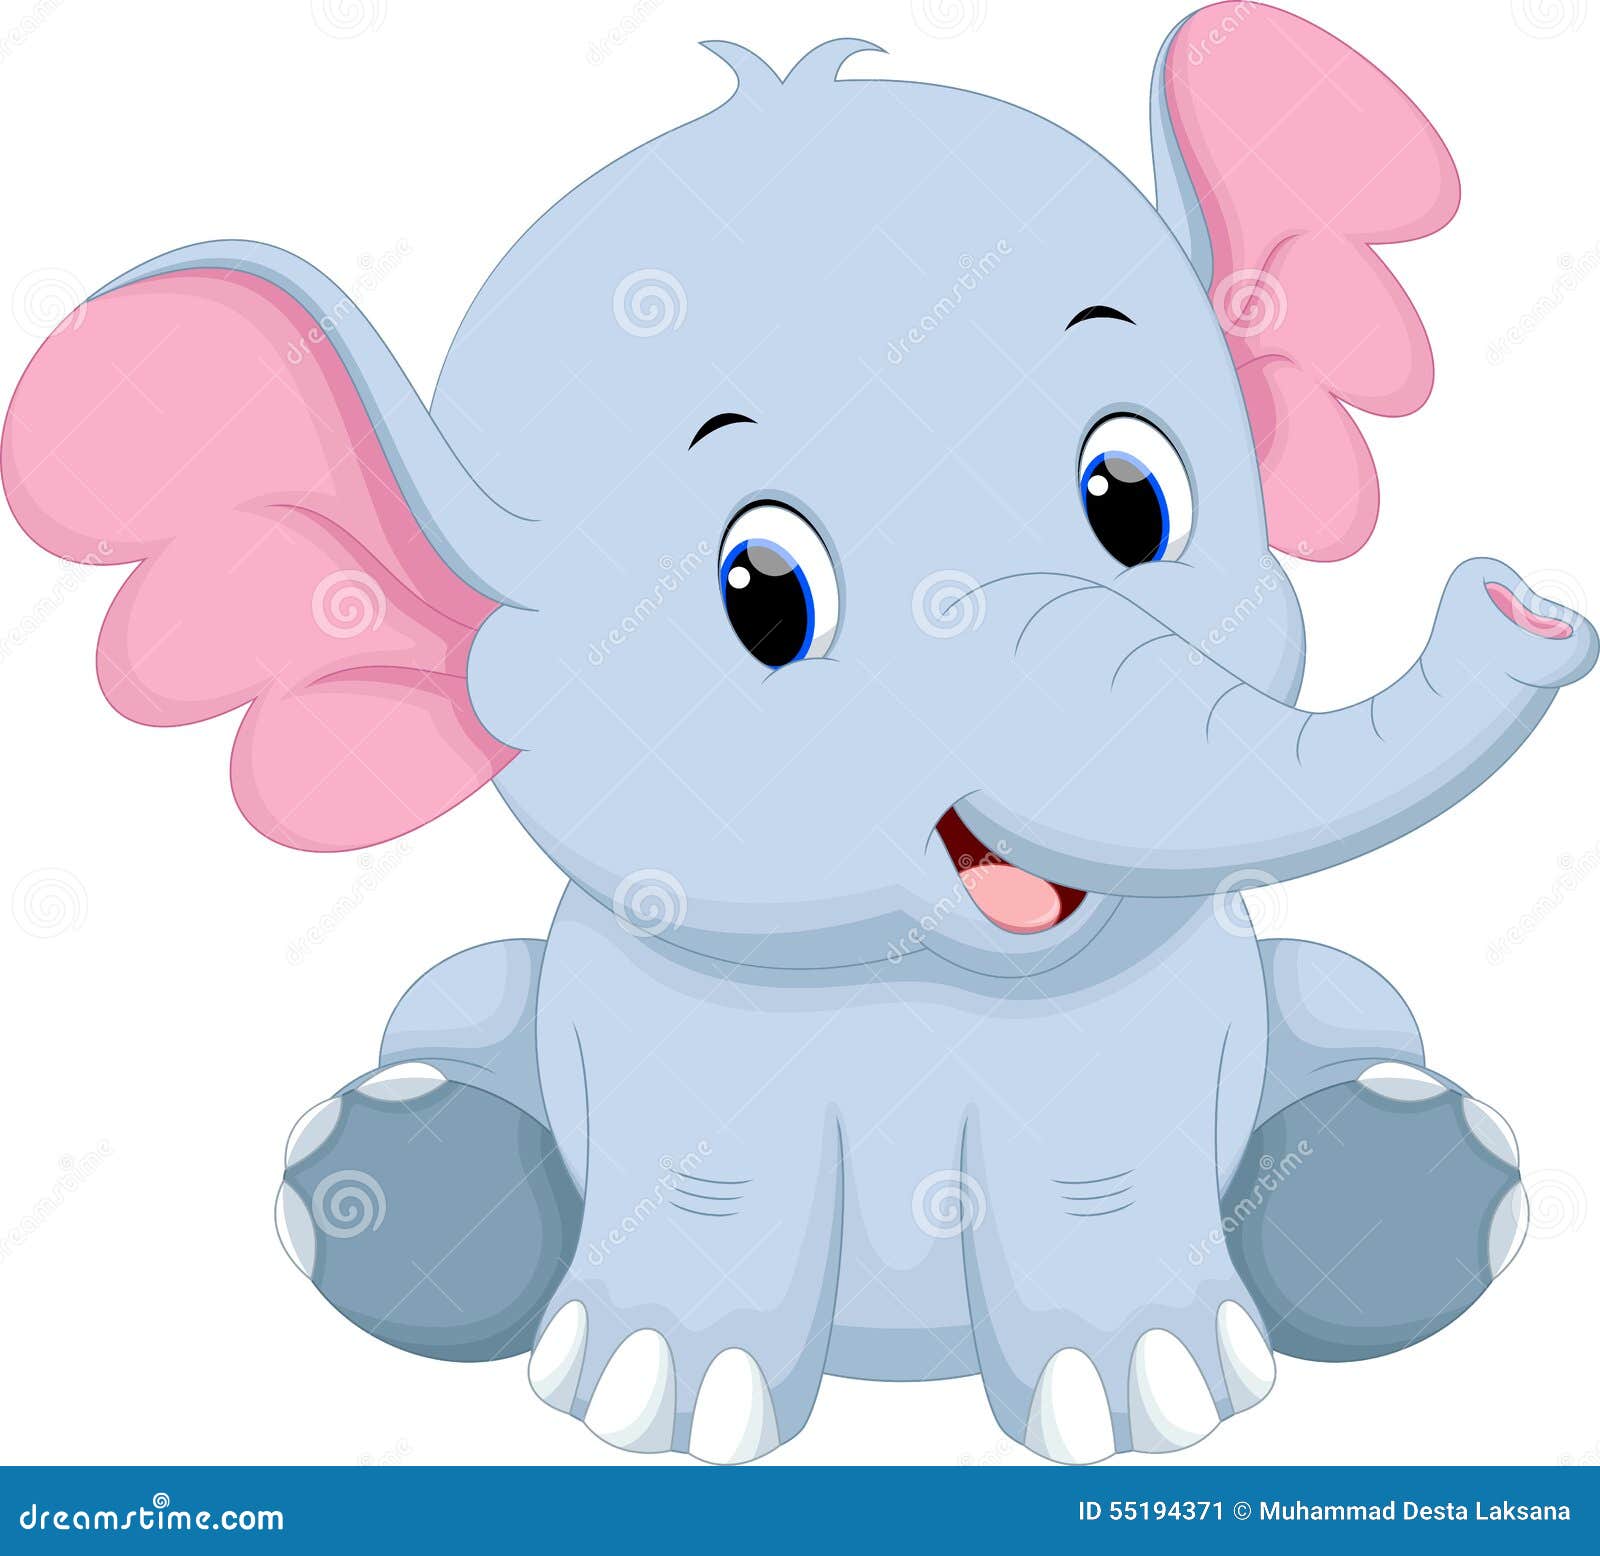 Cute Baby Elephant Cartoon Stock Illustration - Image ...